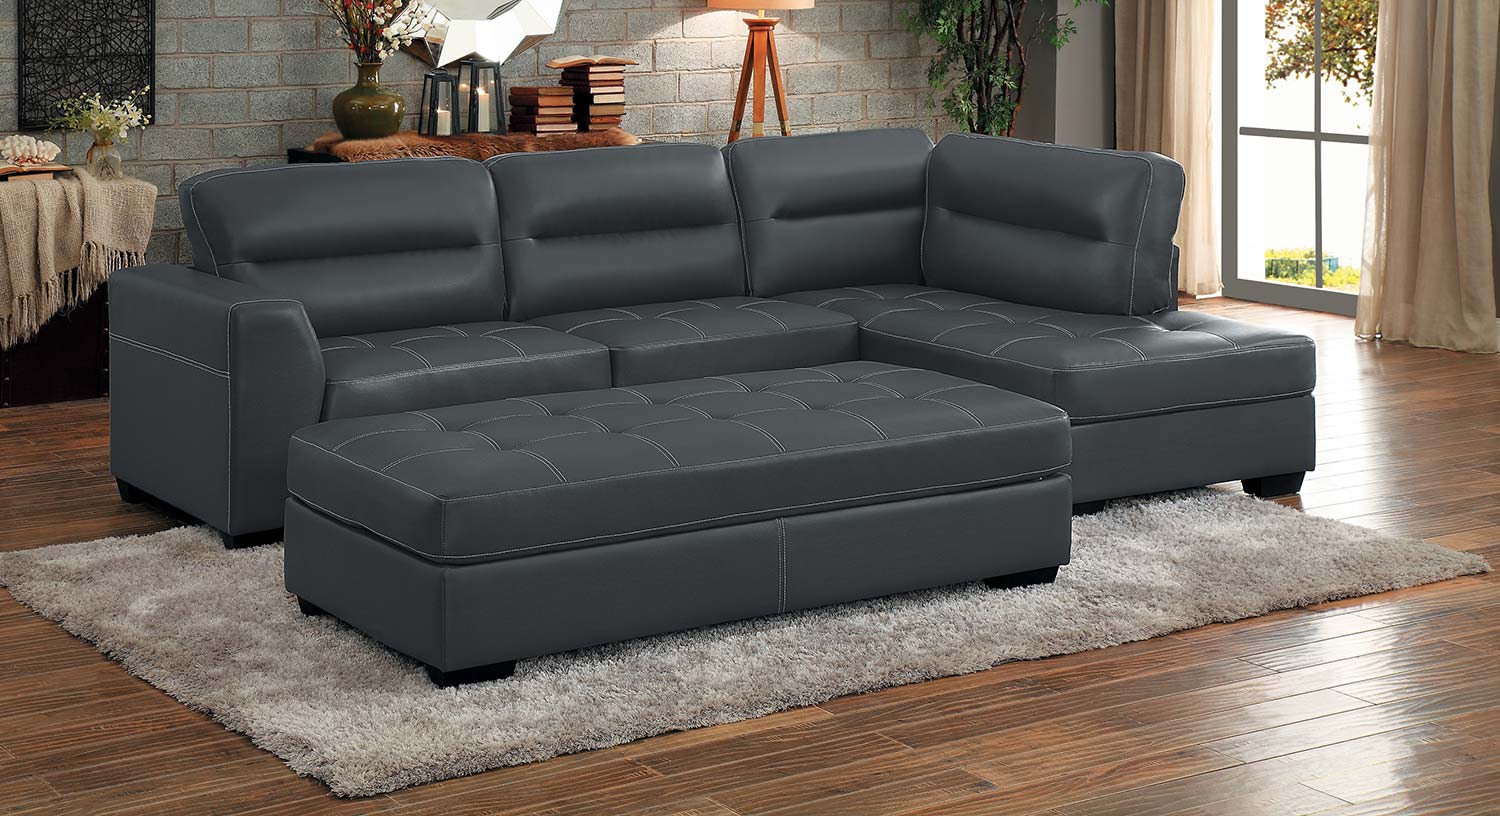 Homelegance Terza Sectional Sofa Set - Gray